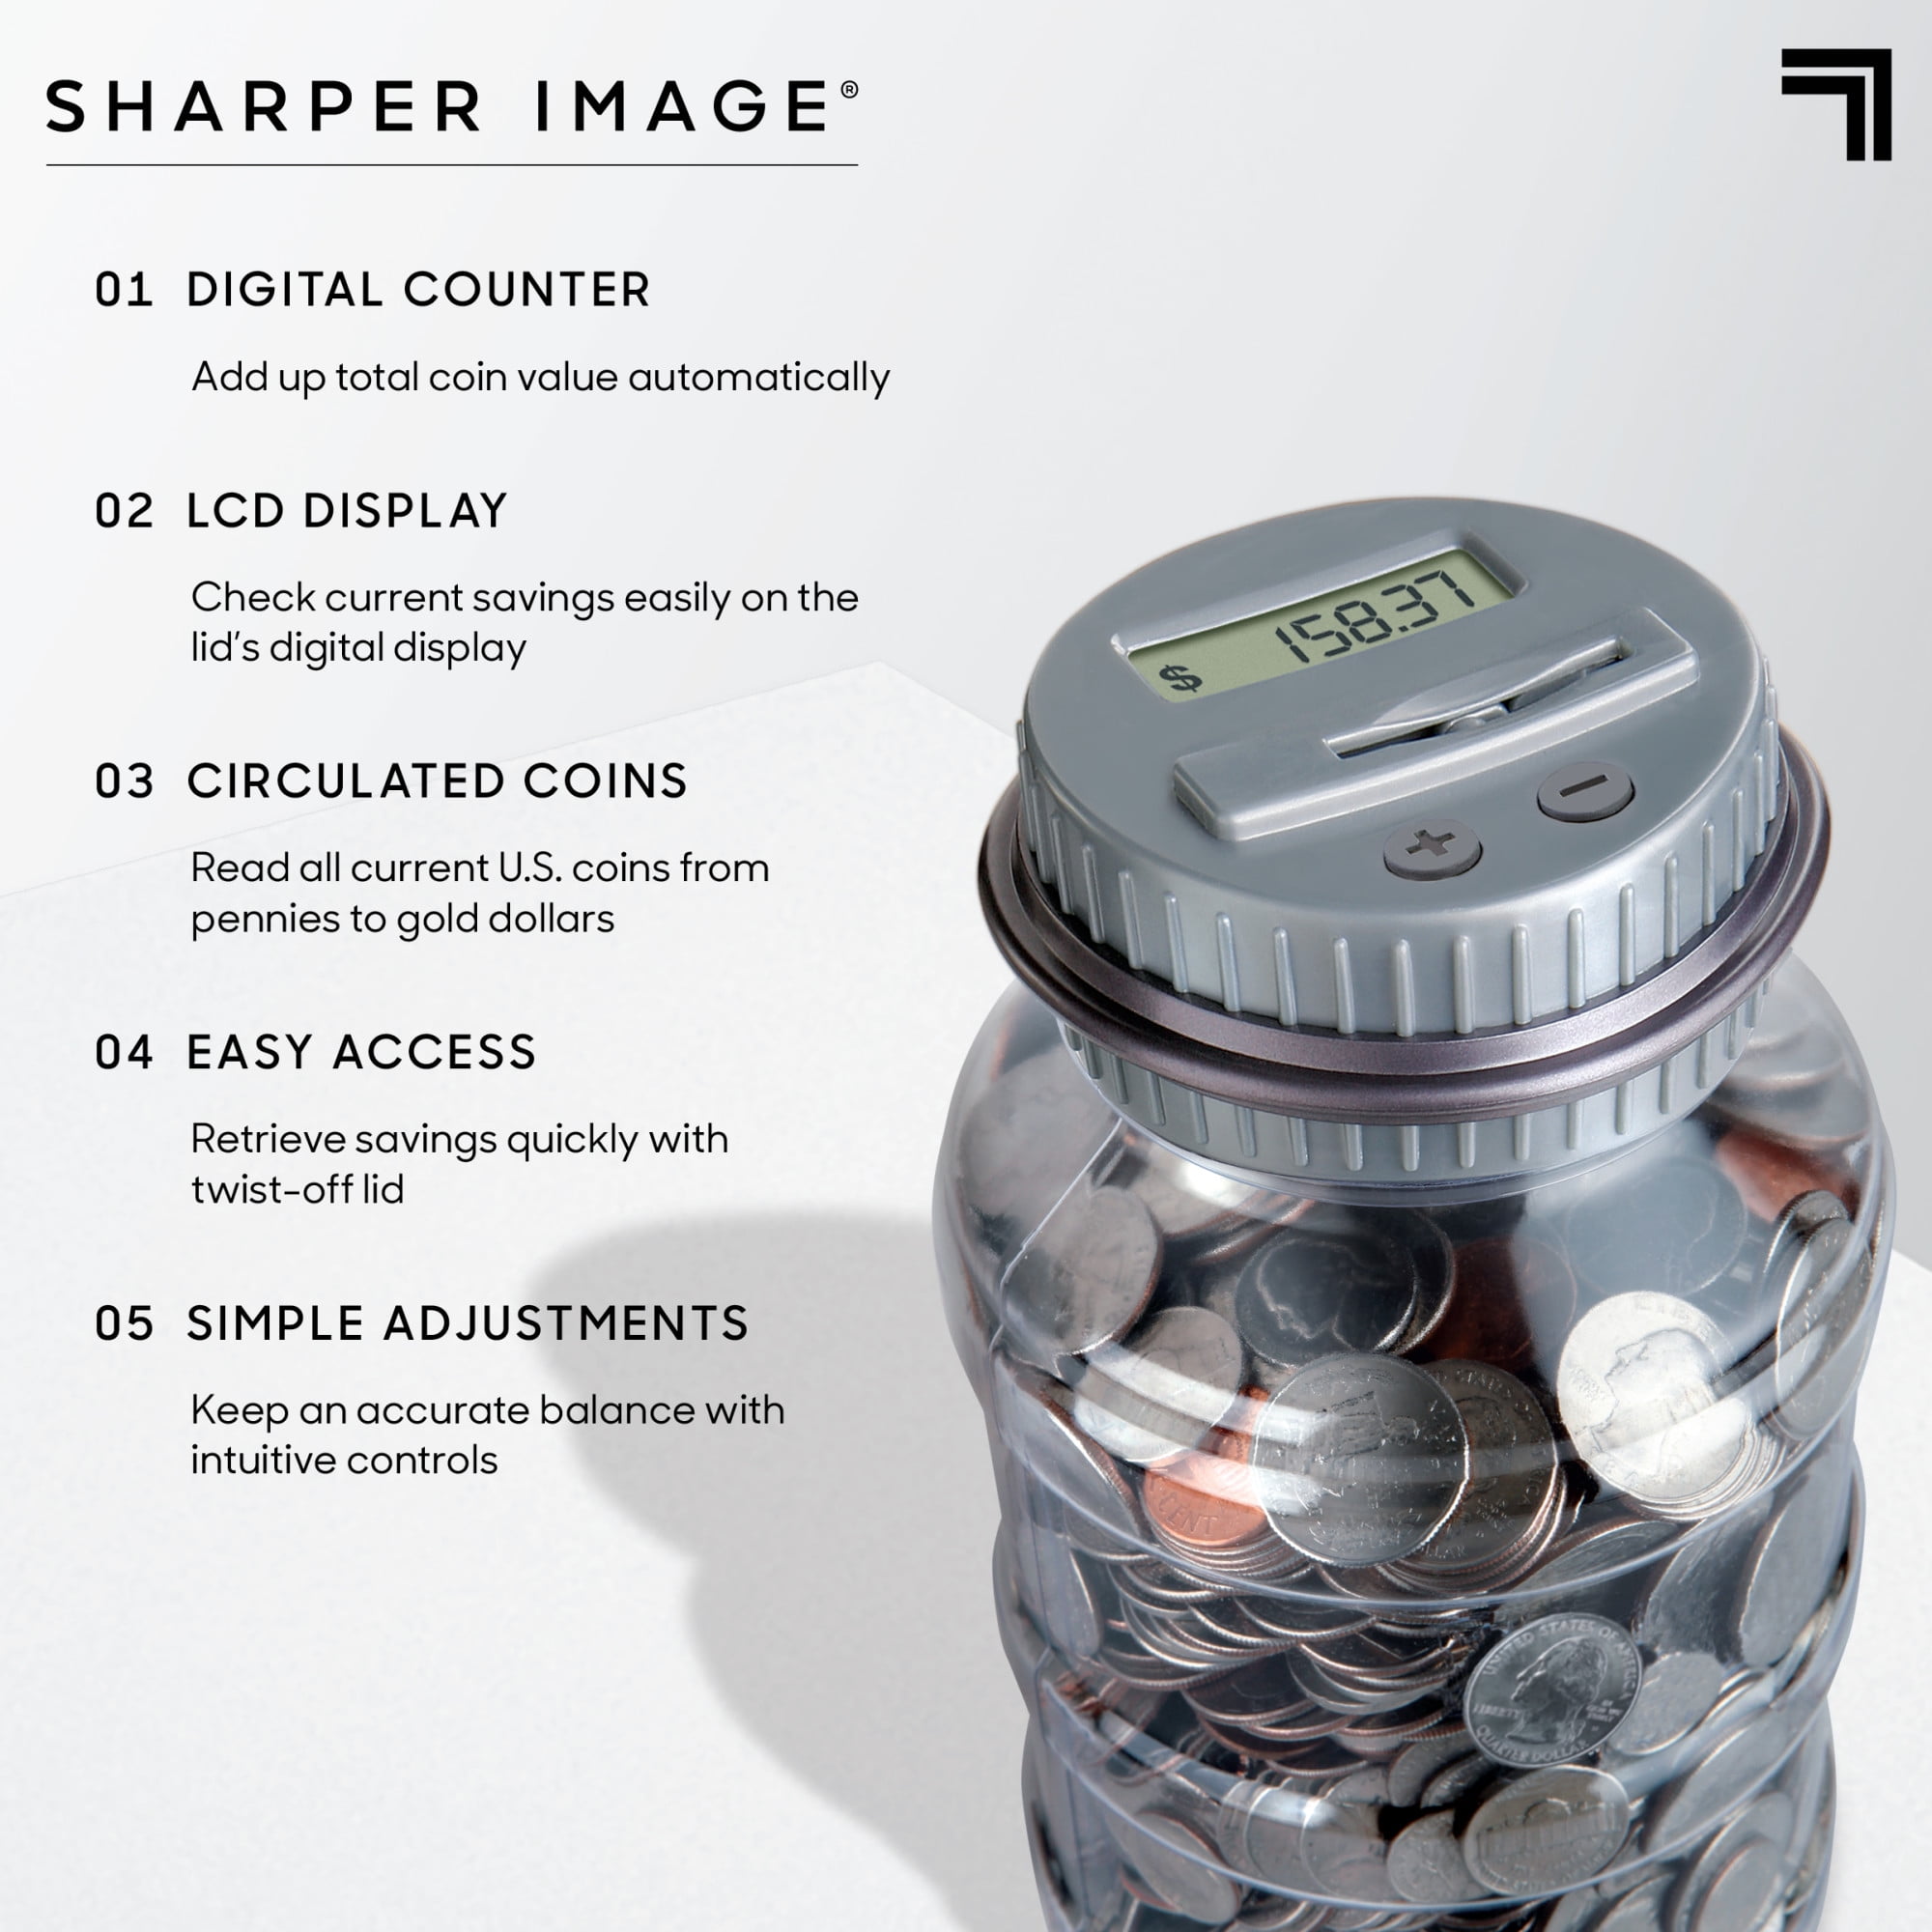 SHARPER IMAGE DIGITAL COUNTING SAVER MONEY JAR PIGGY BANK LCD BLACK RED LID NEW 